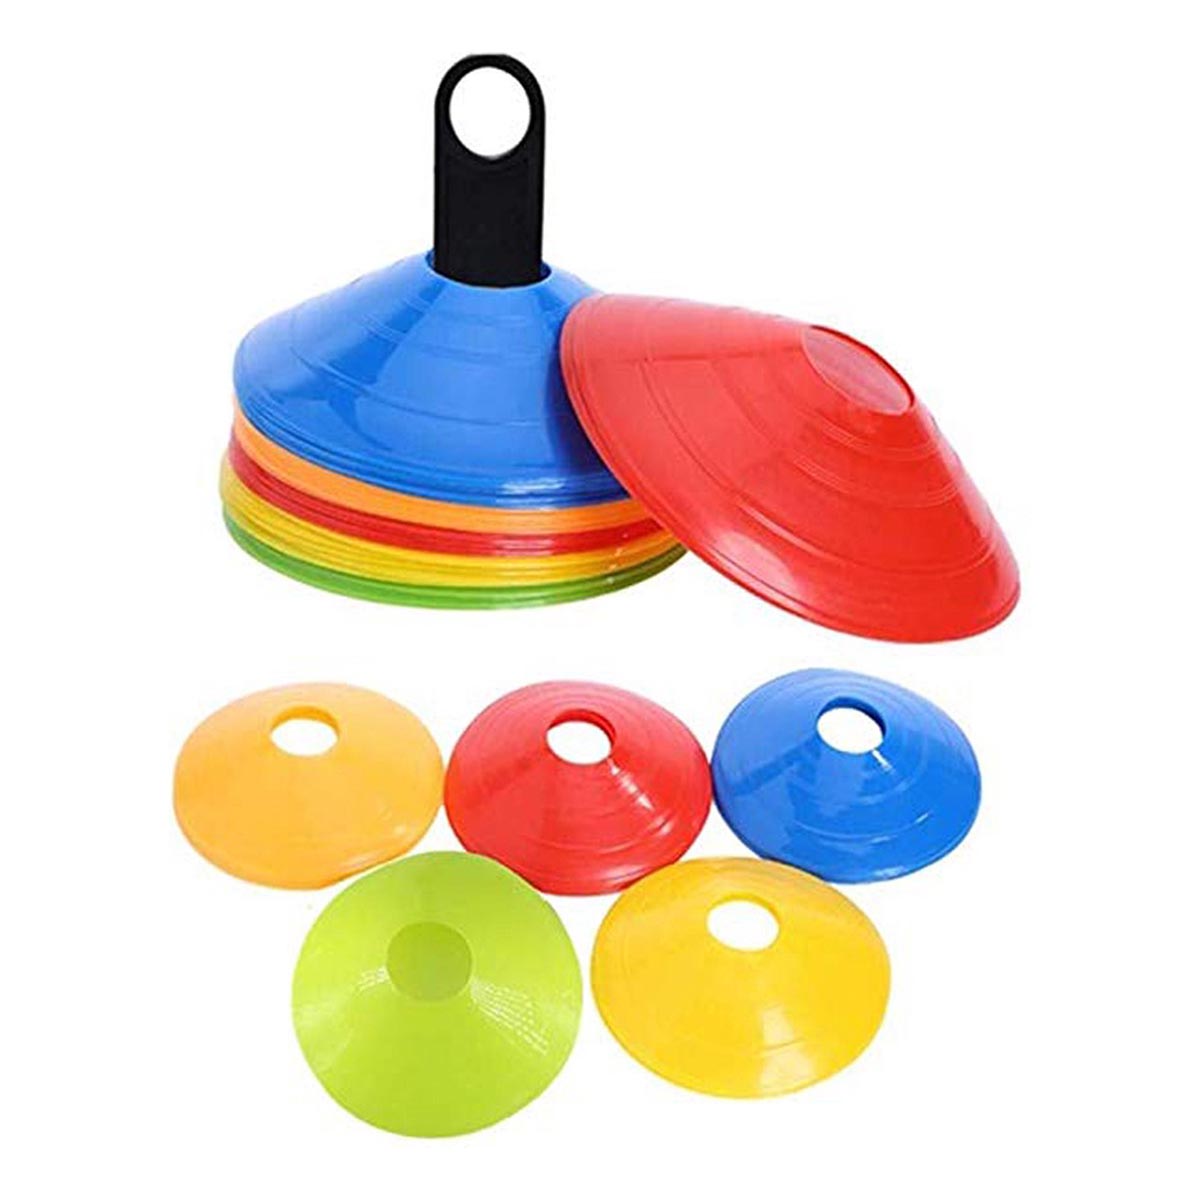 <tc>Ariko</tc>  Professional Pawn set with holder 20/24cm / 50 pieces - Training set - Football hats - Marking discs - Various Colors - Agility discs